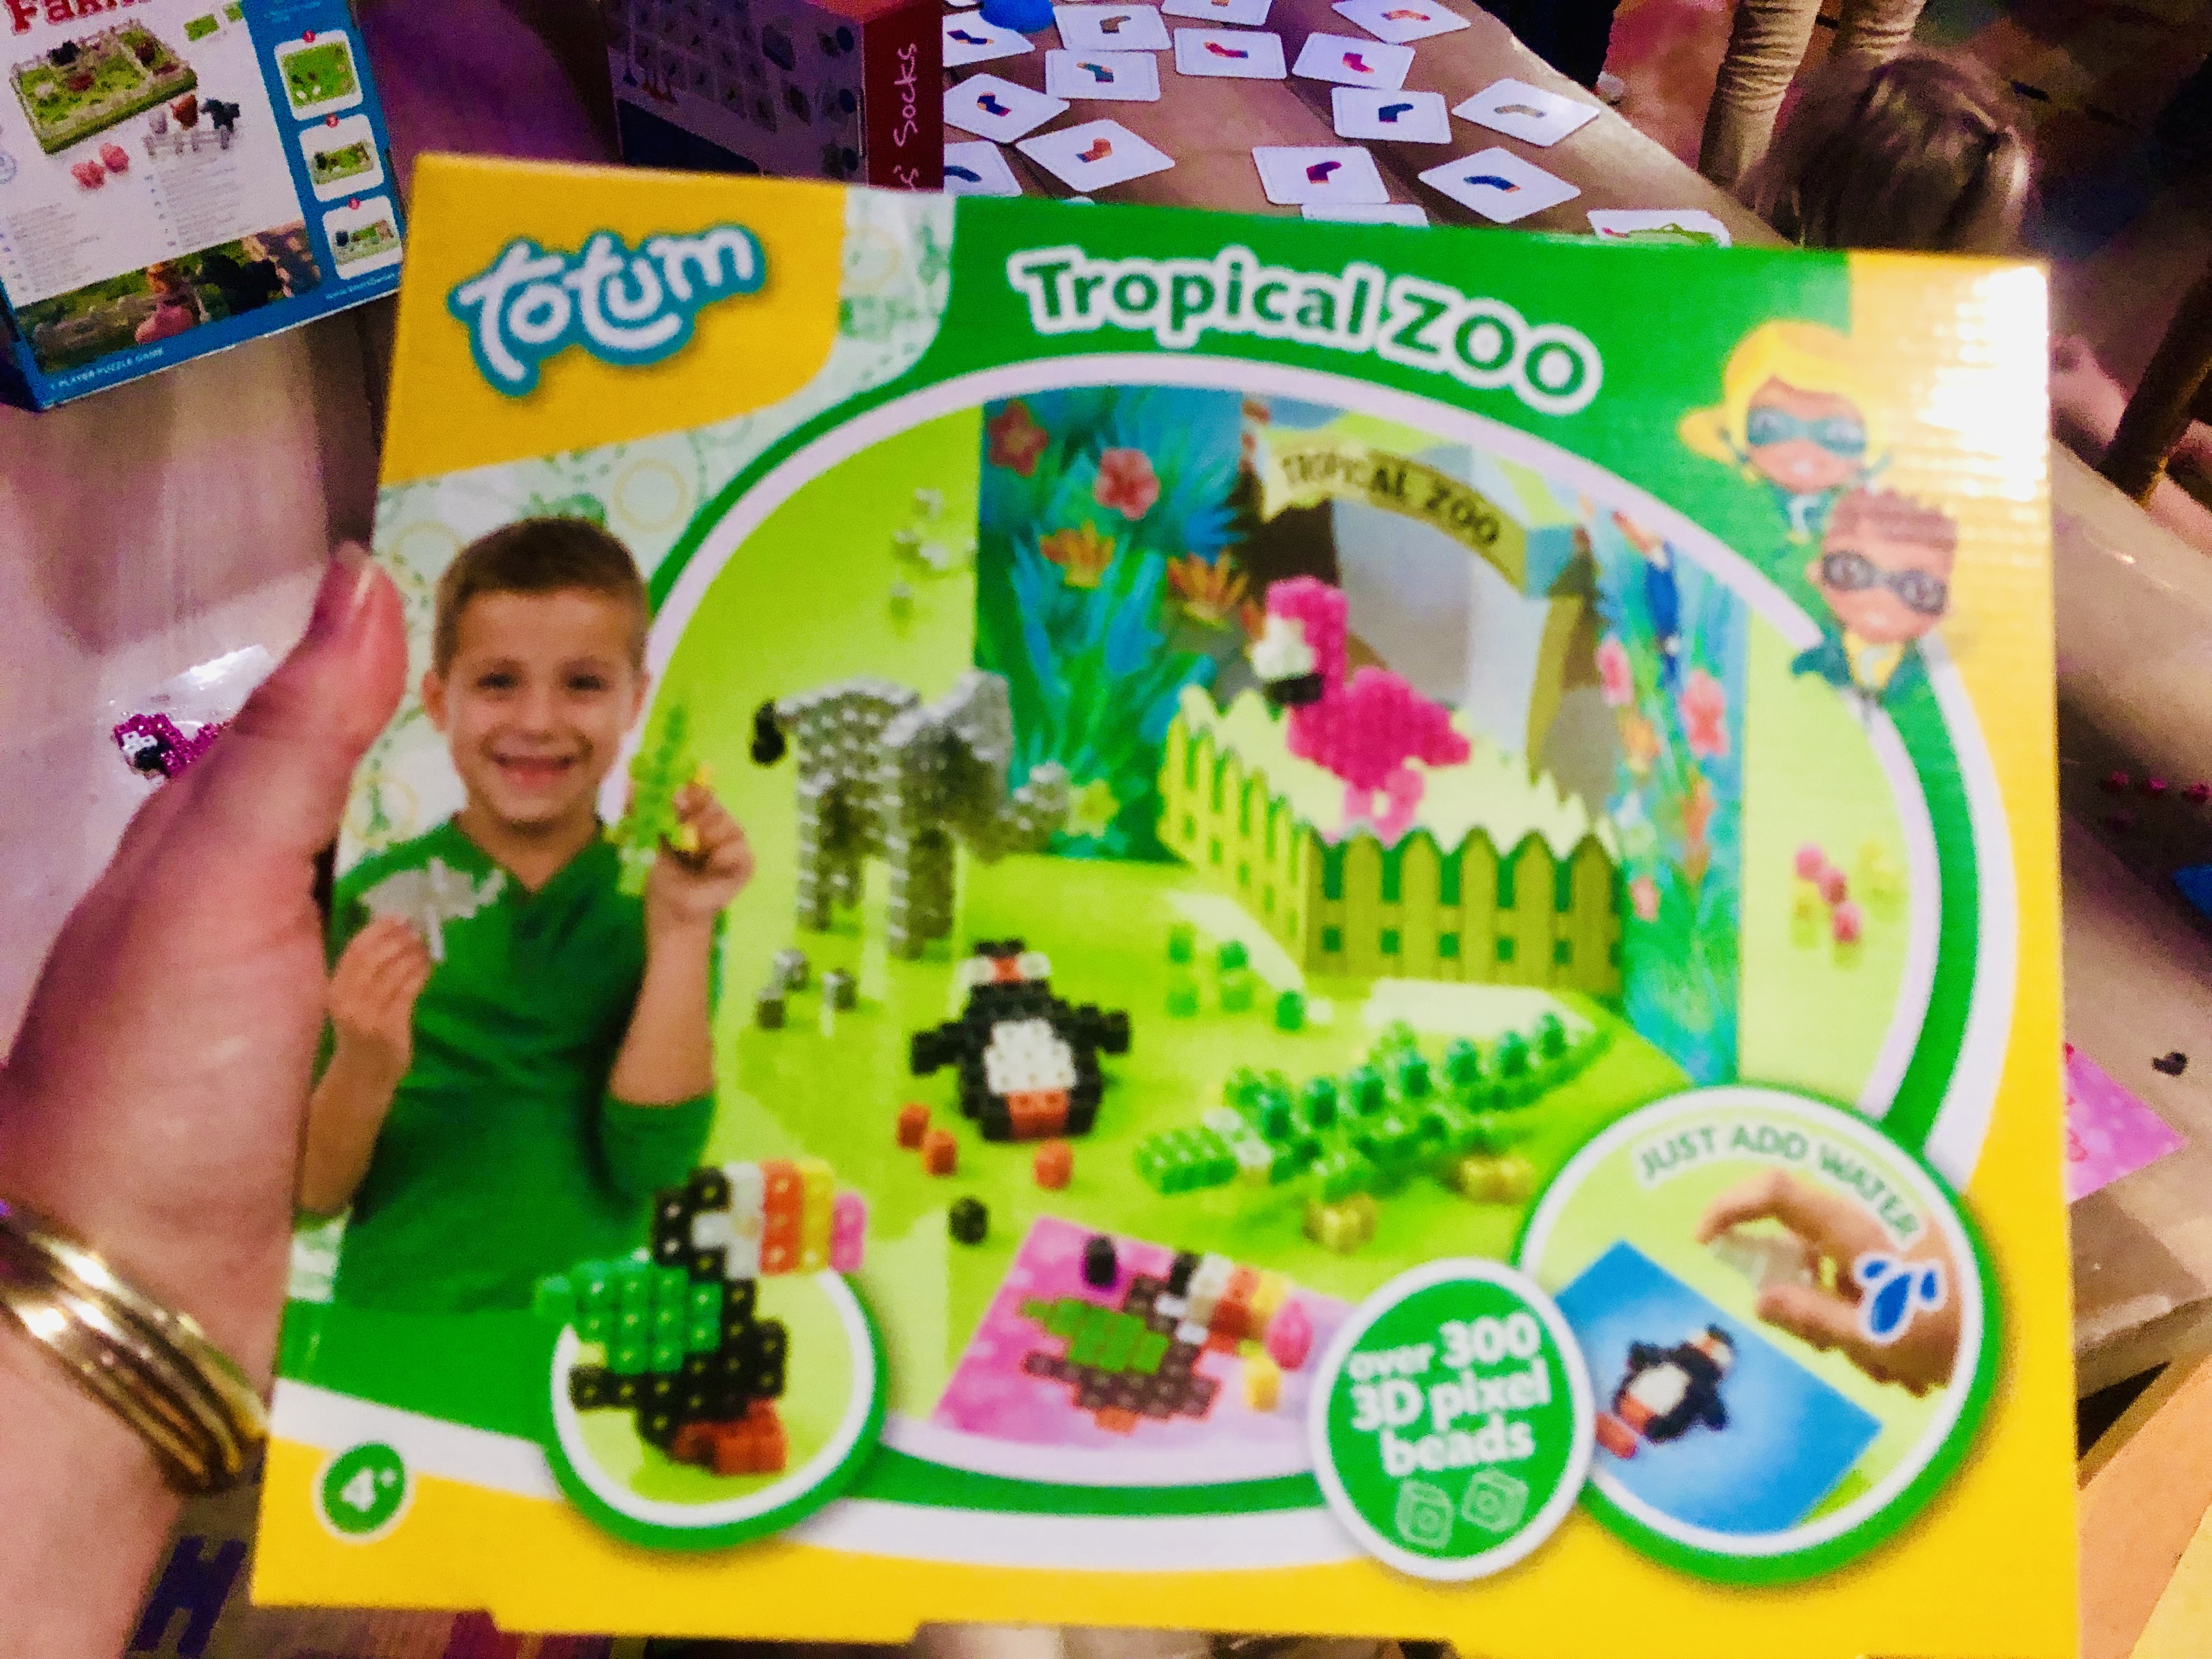 Totum Tropical Zoo 3Dpixel beads